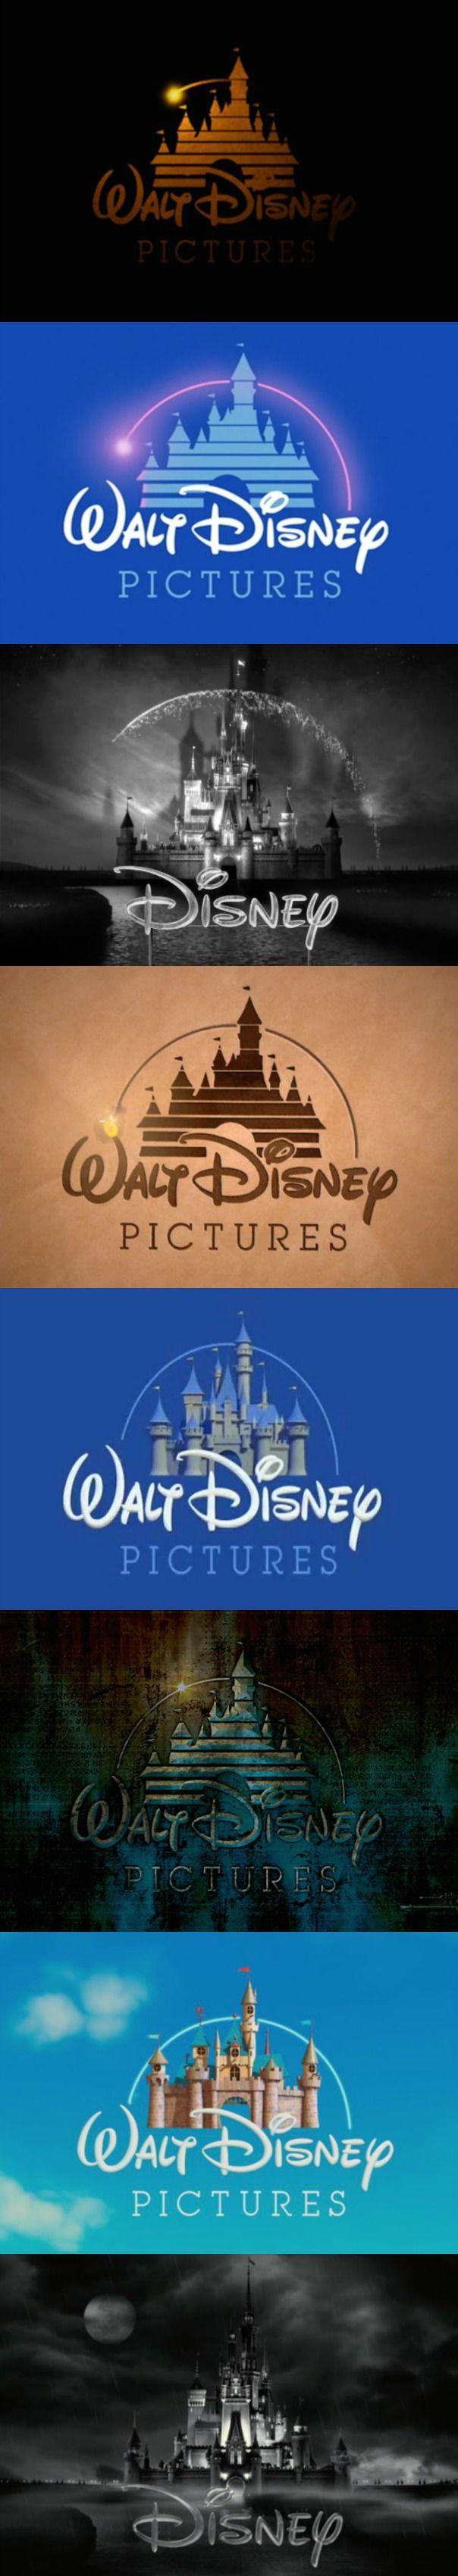 Disney Films Logo - What film is this Disney opening from? | Disney & More | Disney ...